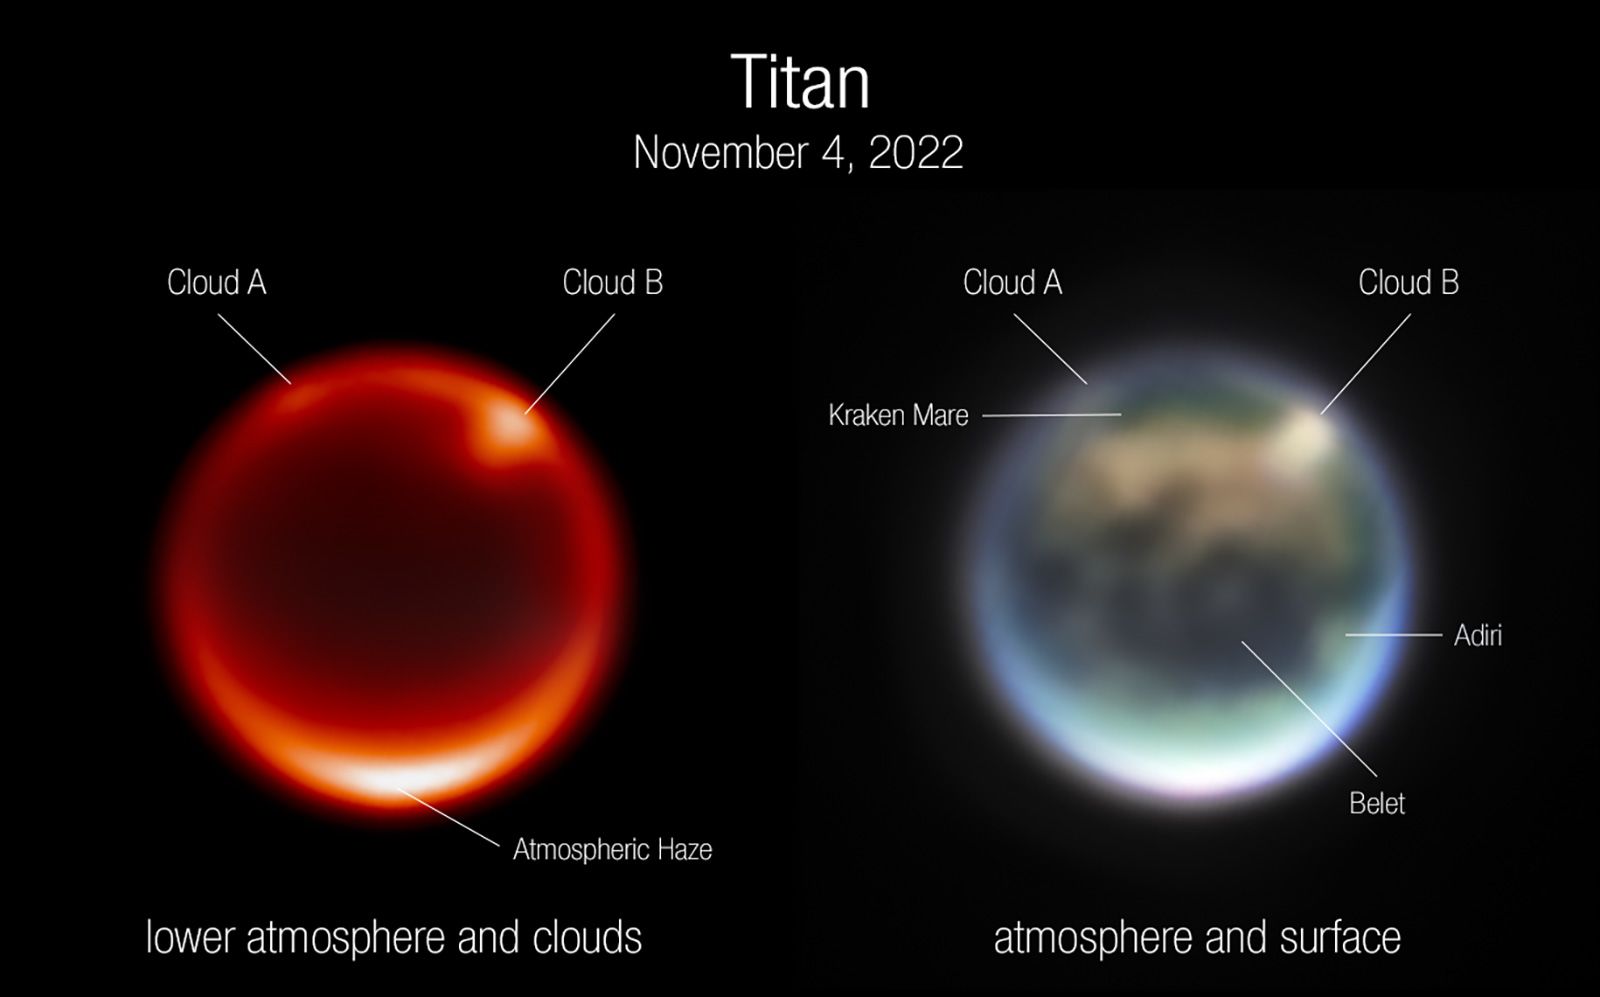 telescope spies clouds beneath haze of Saturn moon Titan | CNN